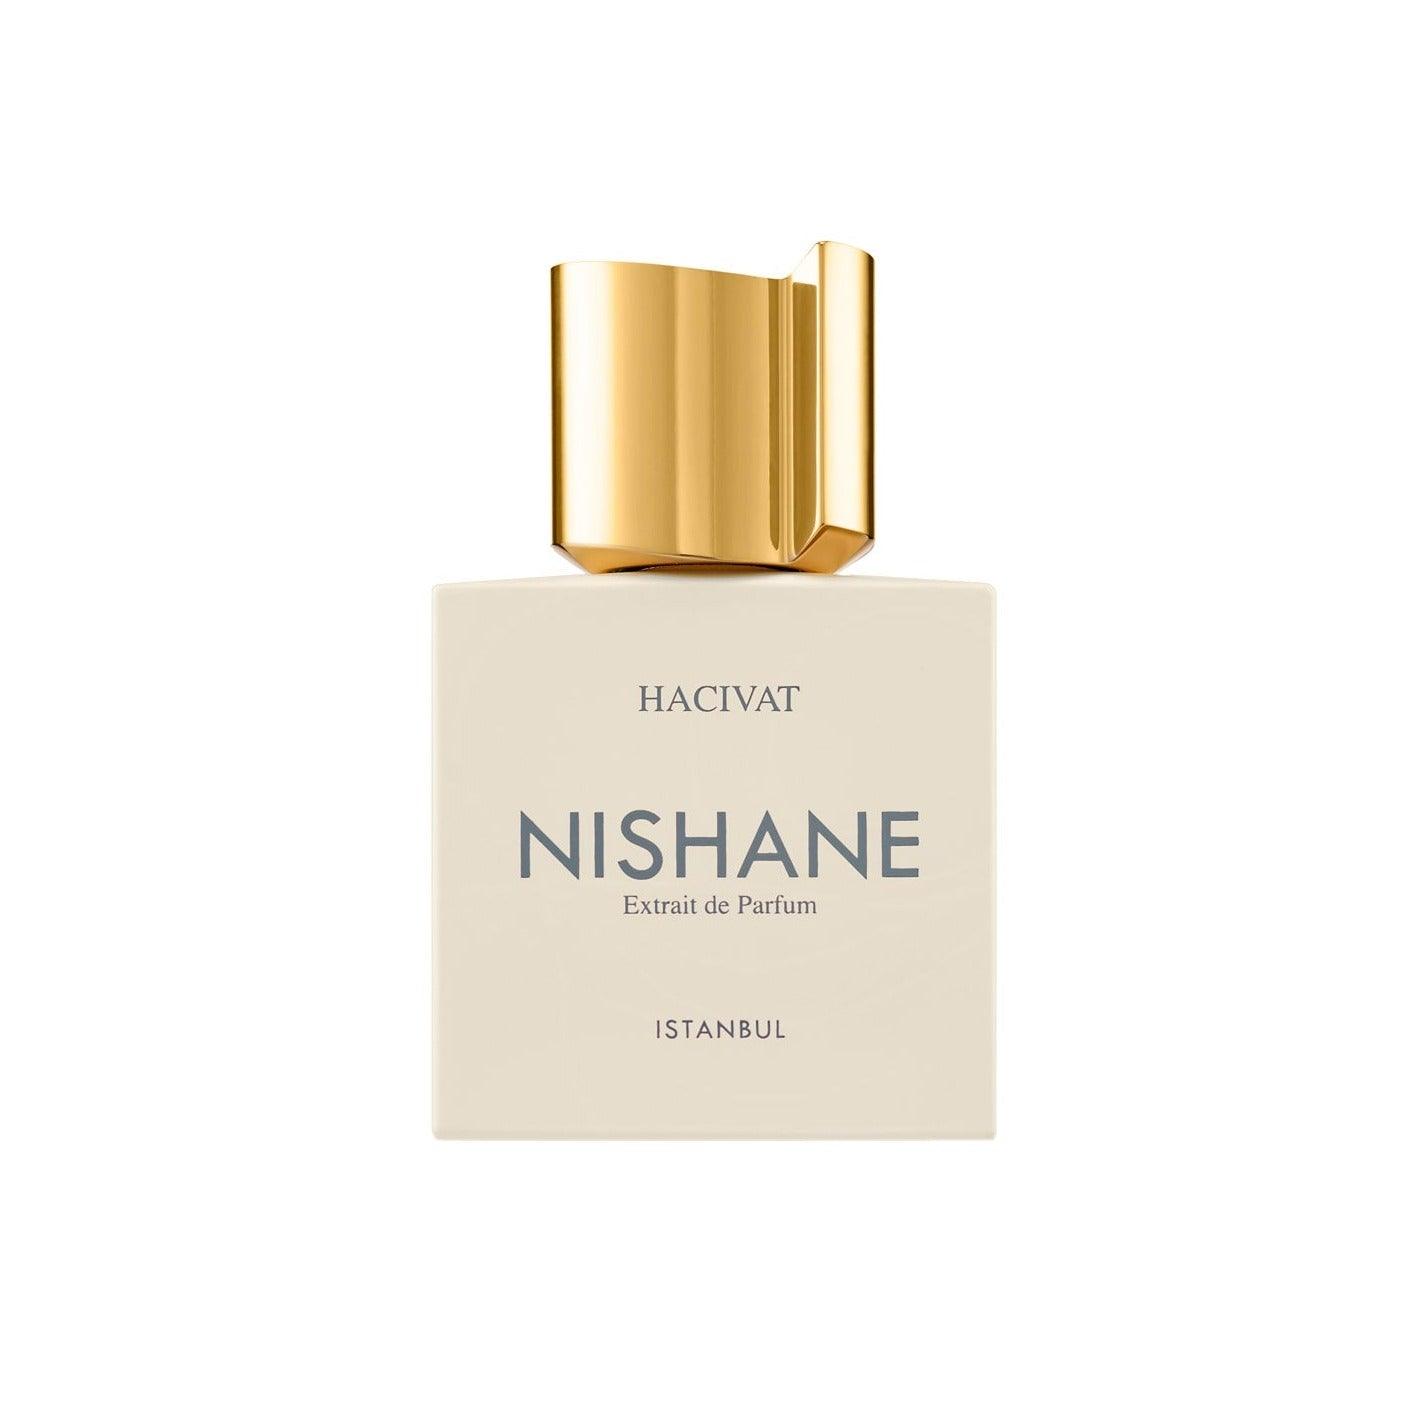 Nishane Hacivat (U) Extrait De Parfum 50ml - undefined - TheFirstScent -Hong Kong